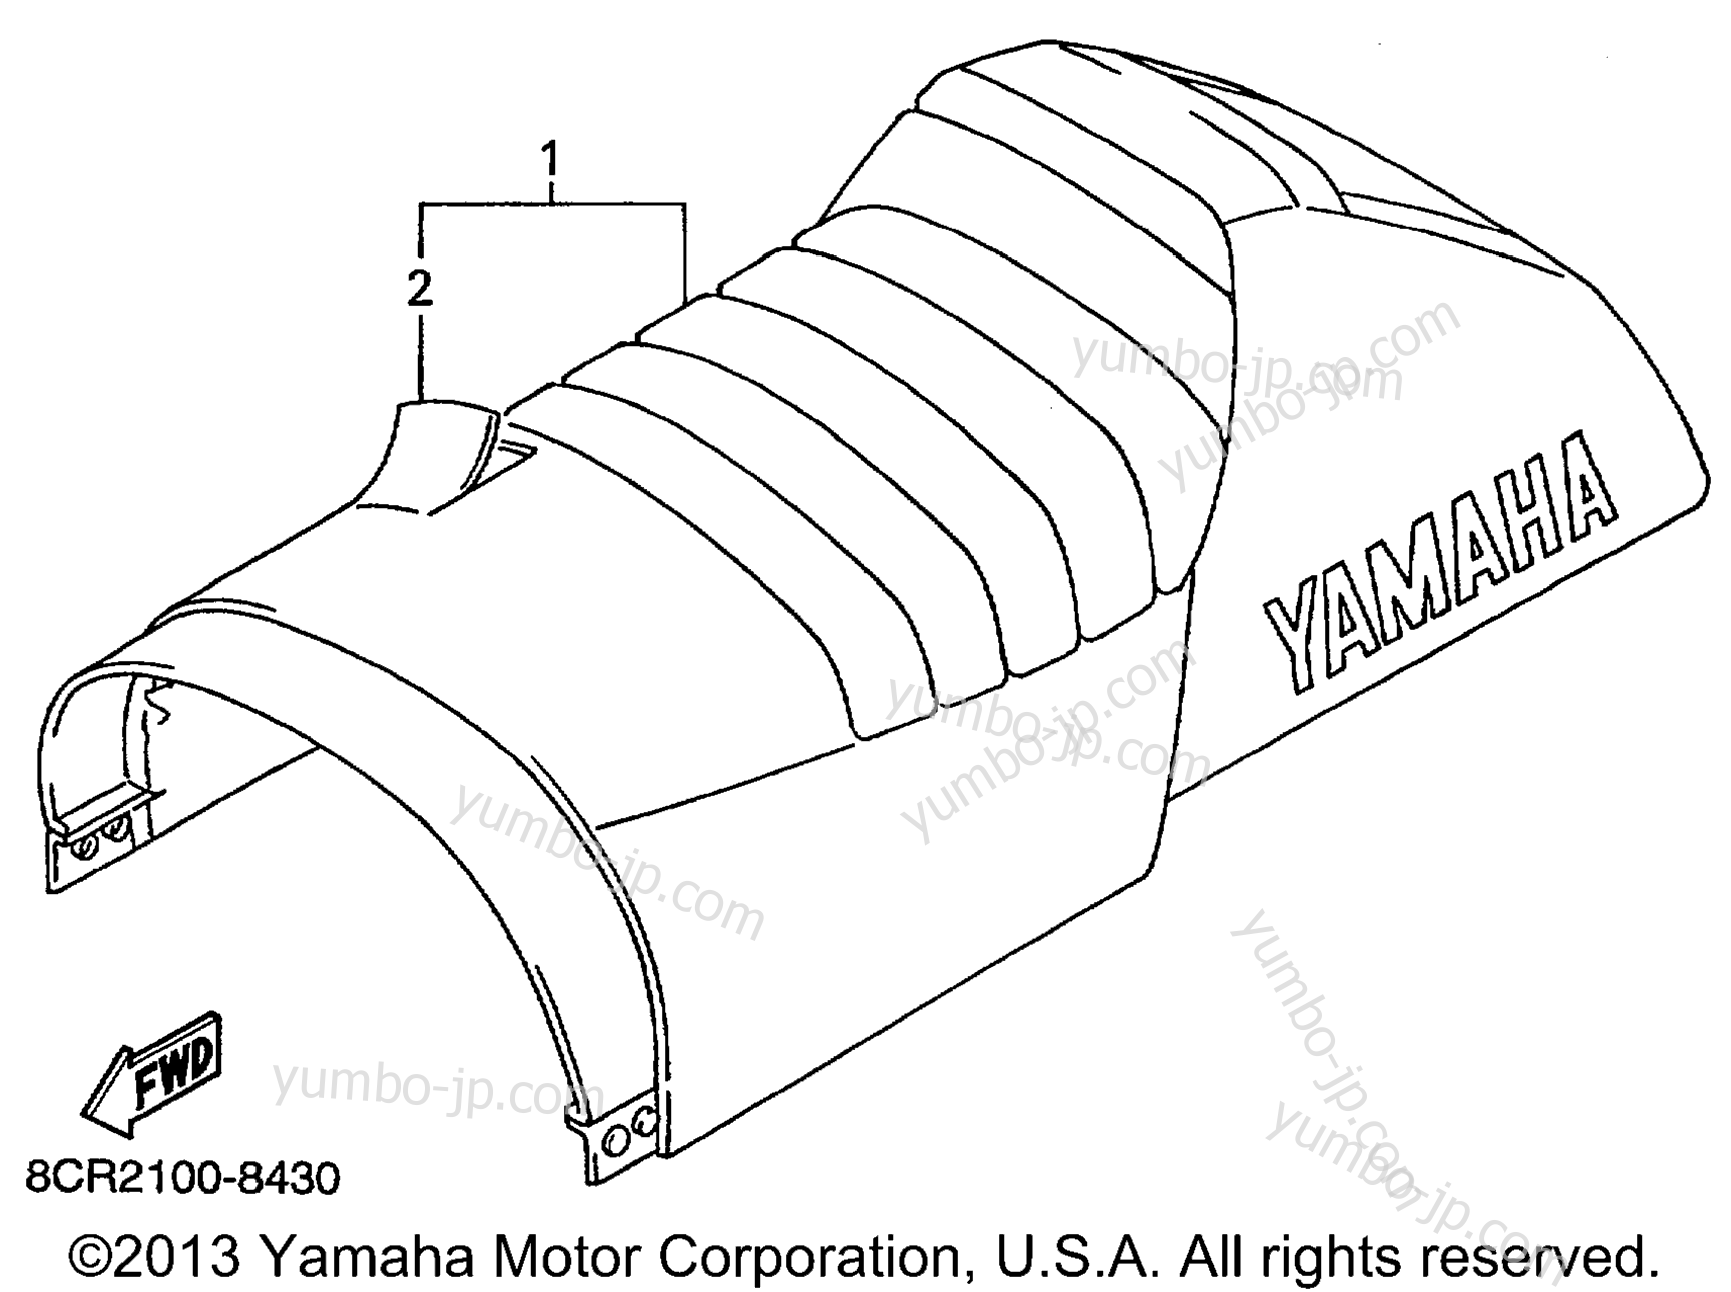 Alternate Body Rig 3 for snowmobiles YAMAHA VMAX 600 DELUXE (ELEC START) (VX600ERC) 1999 year